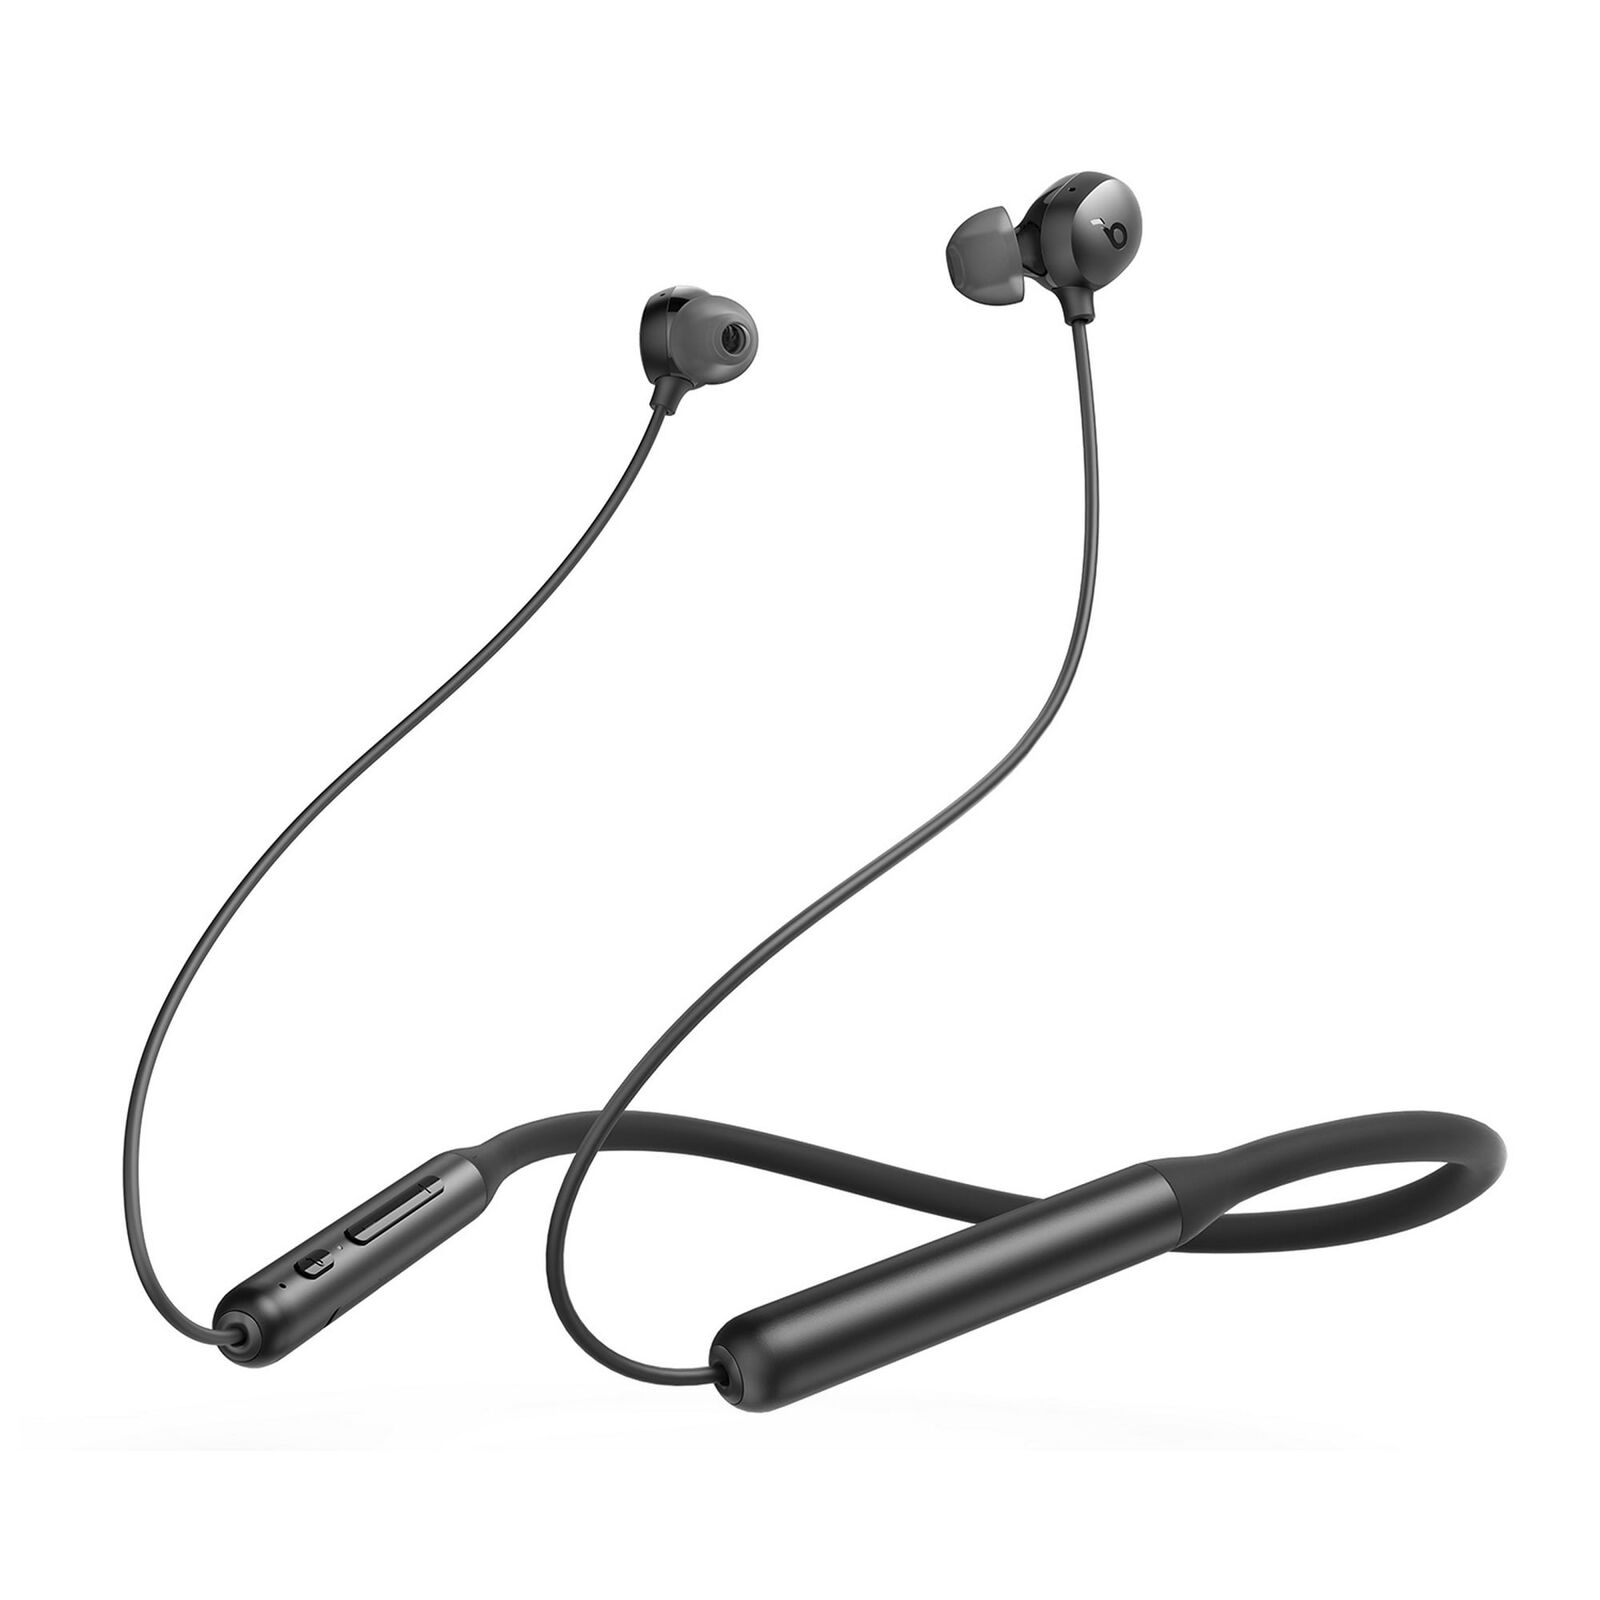 Soundcore Life U2i Bluetooth Neckband Headphones Ergonomic Sports Headset IPX5